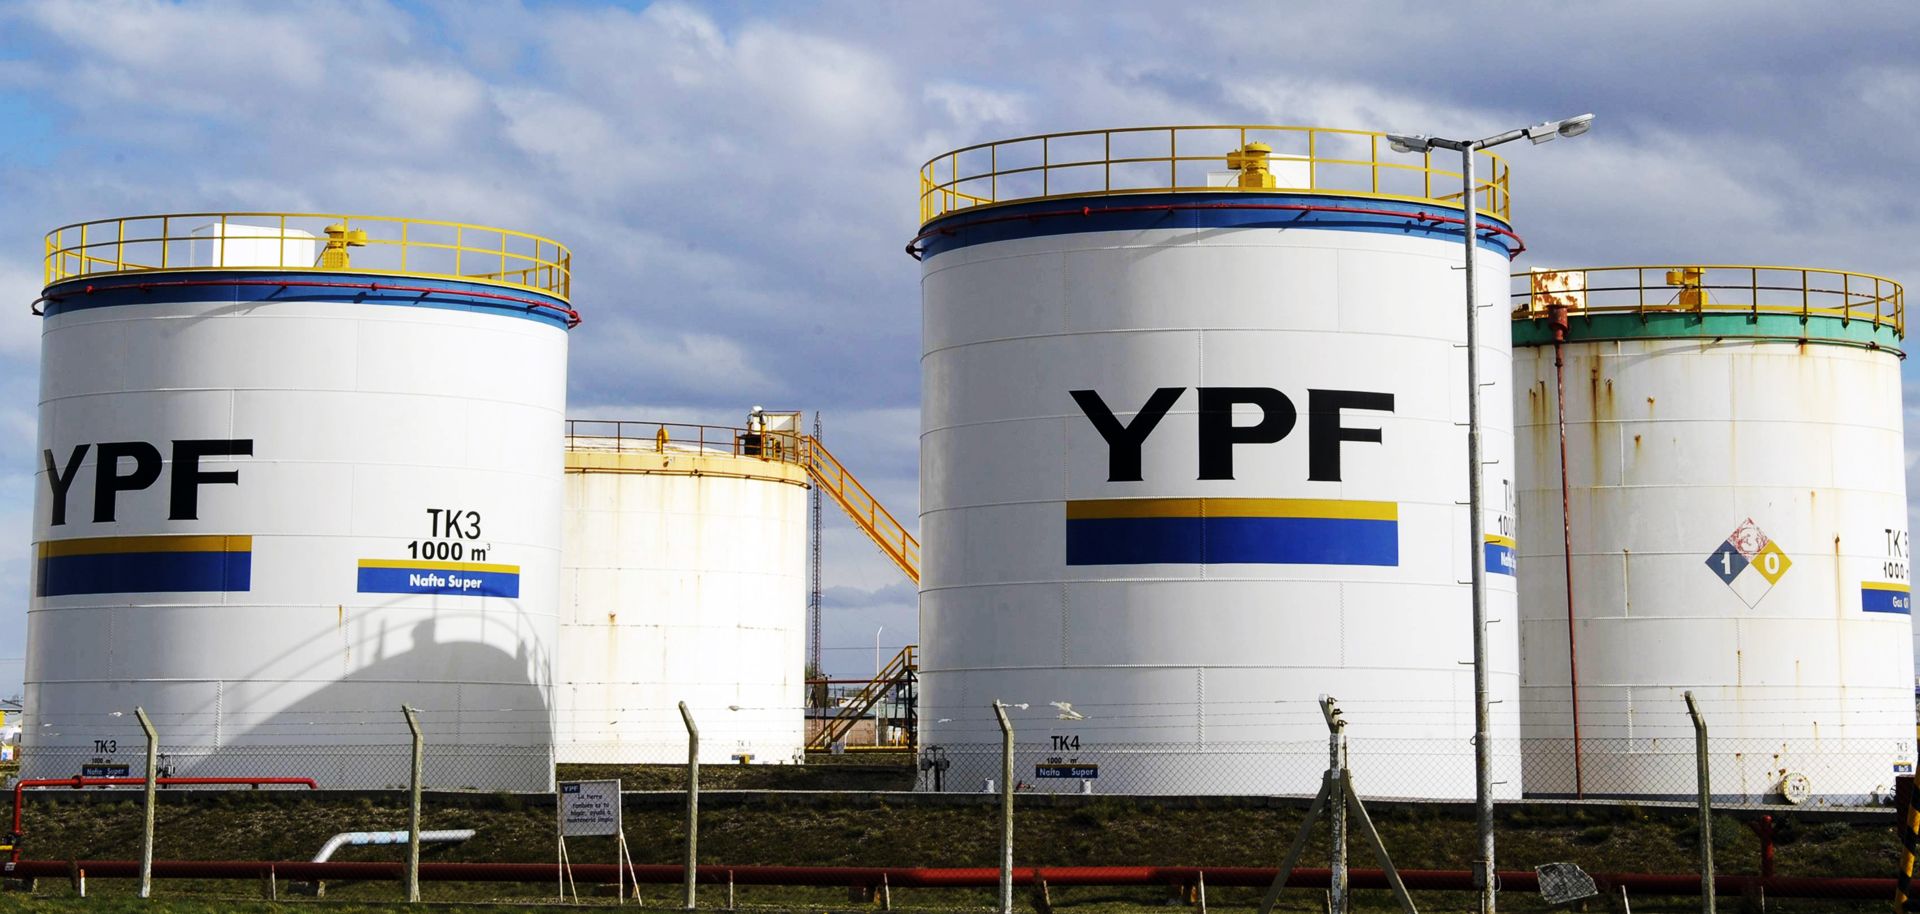 YPF gasoline tanks in Rio Gallegos, Argentina